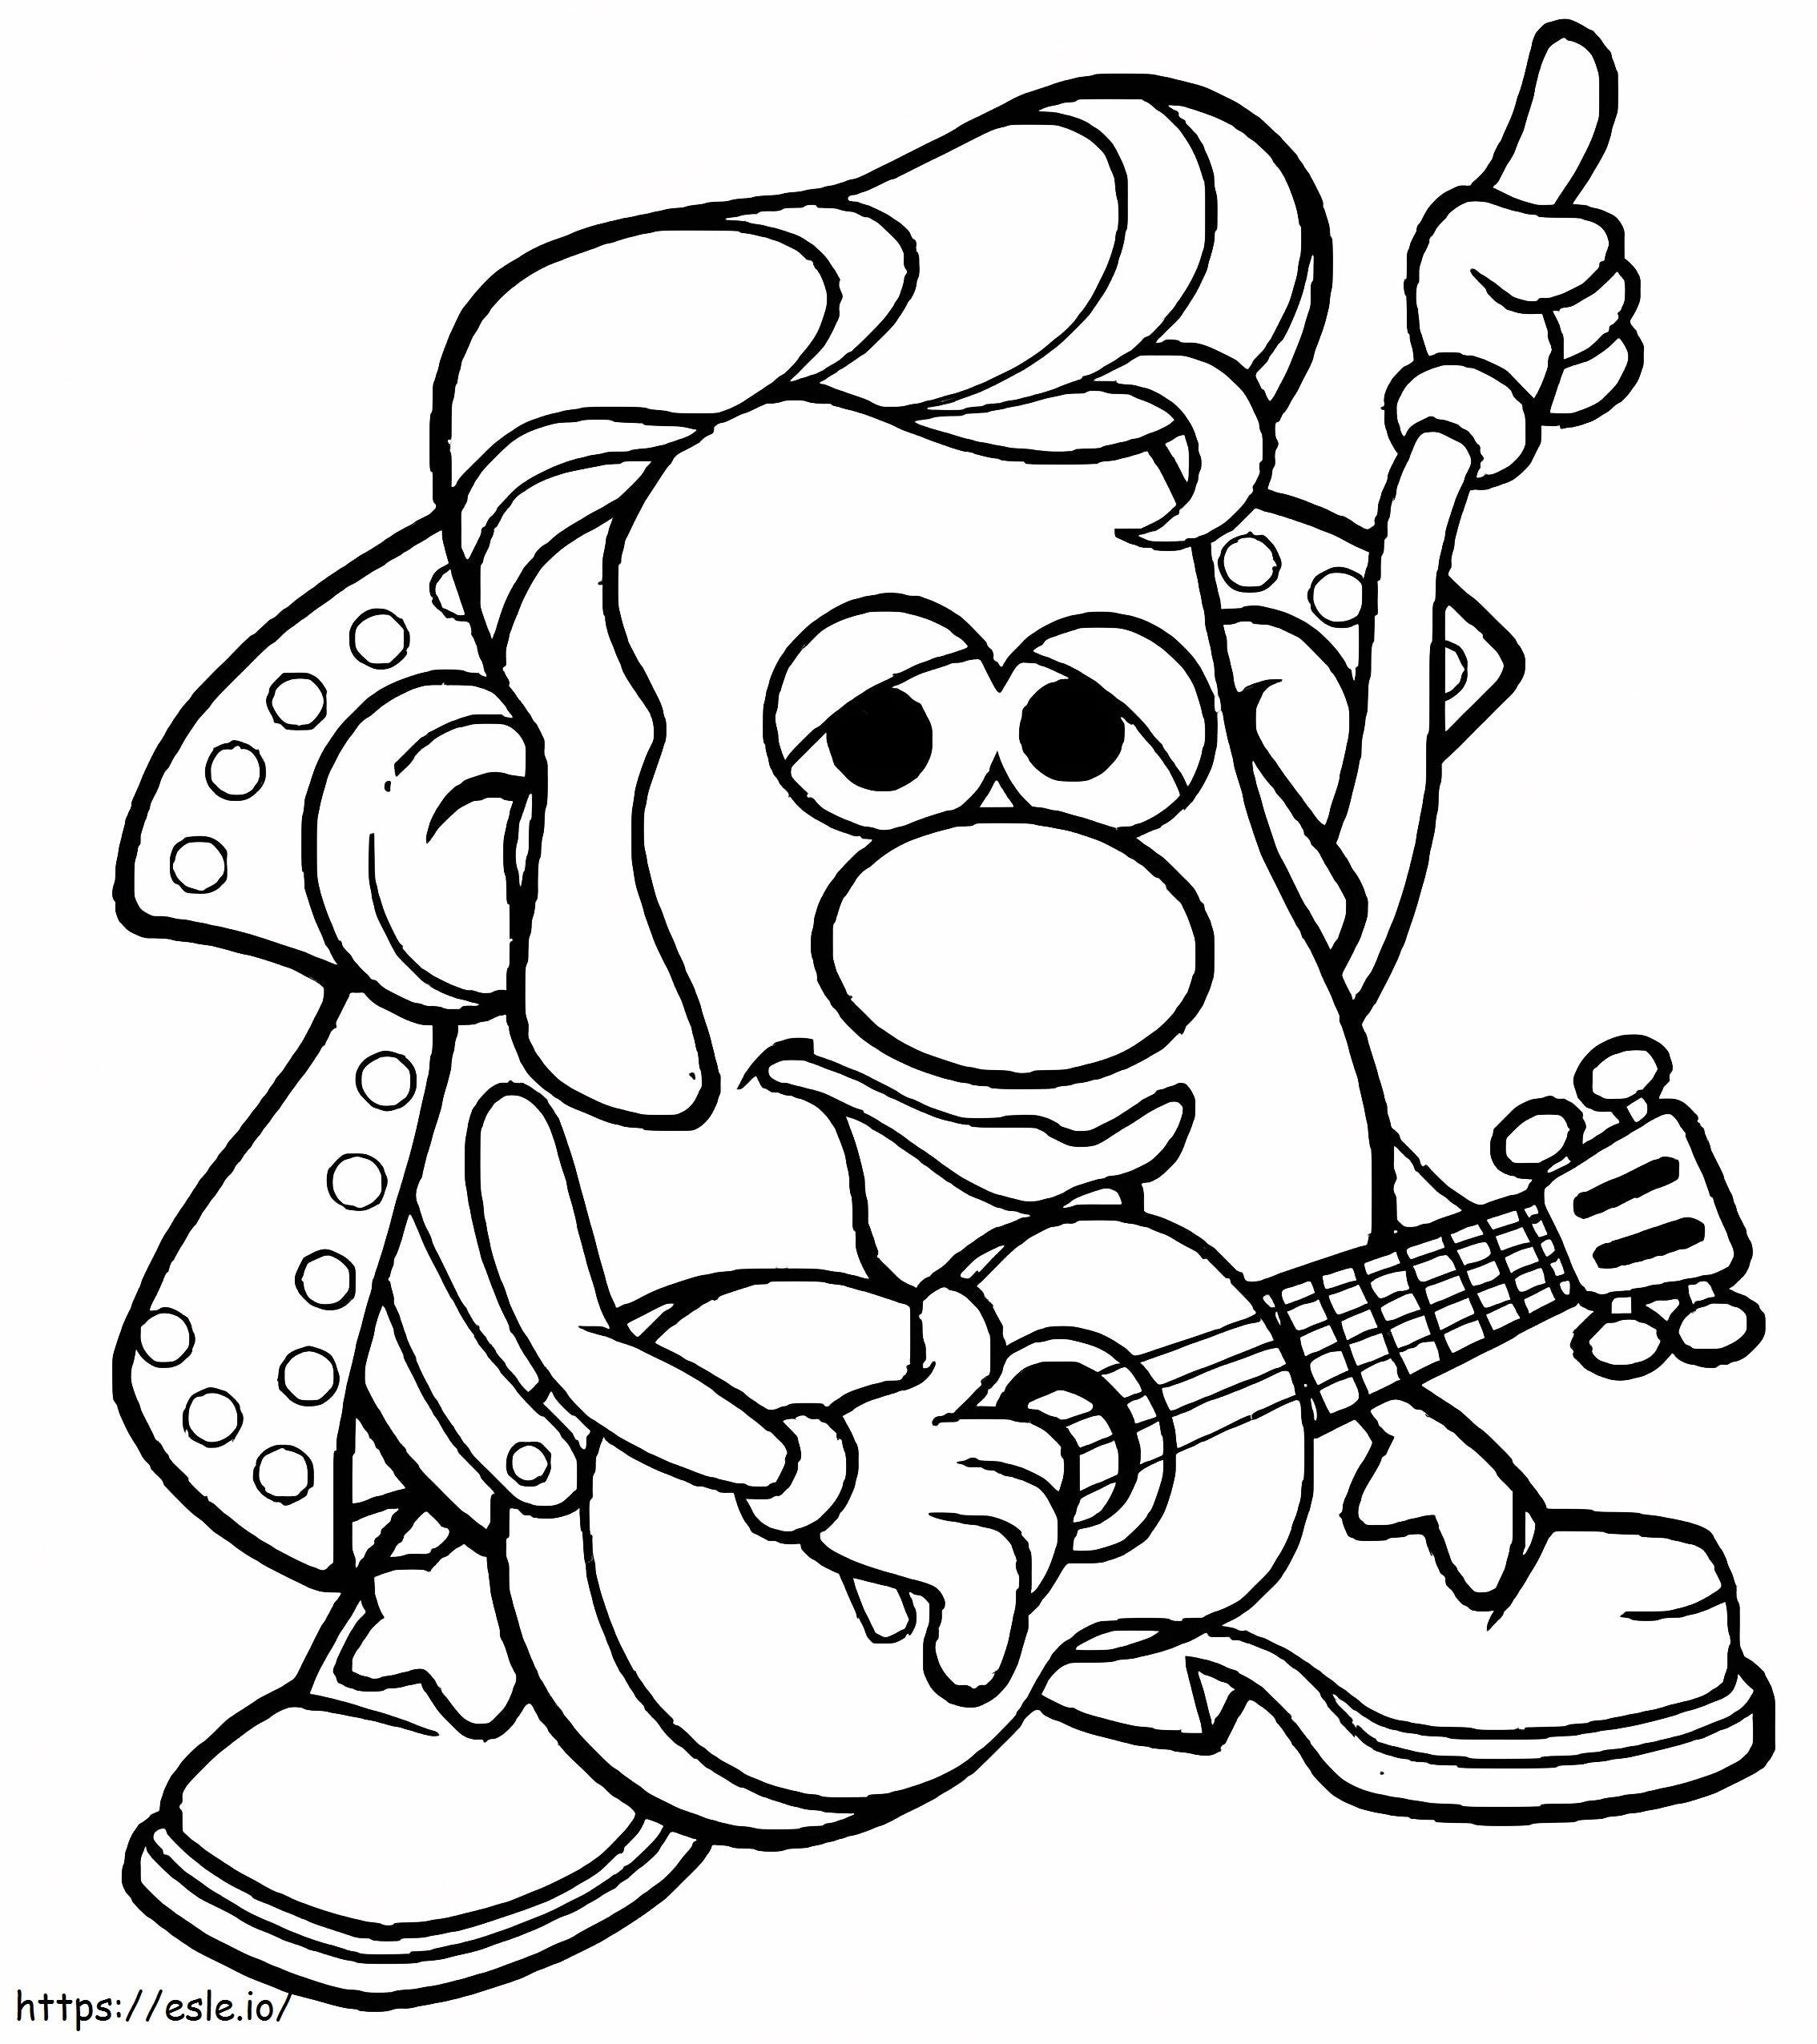 Cool Mr. Potato Head coloring page